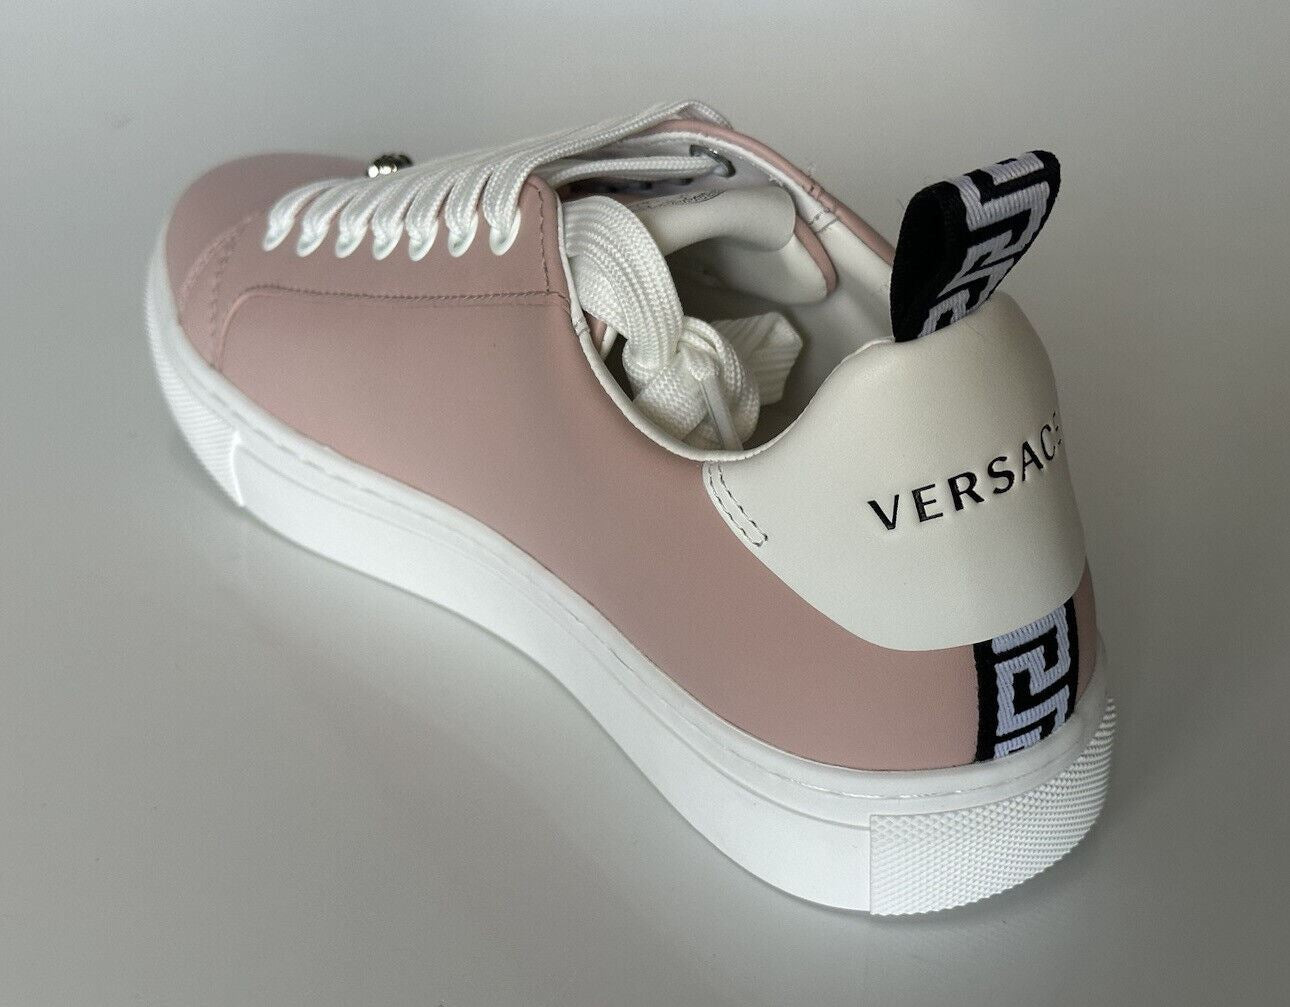 NIB $750 Versace Low Top Blush/White Leather Sneakers 8 US (38 Euro) 1002773